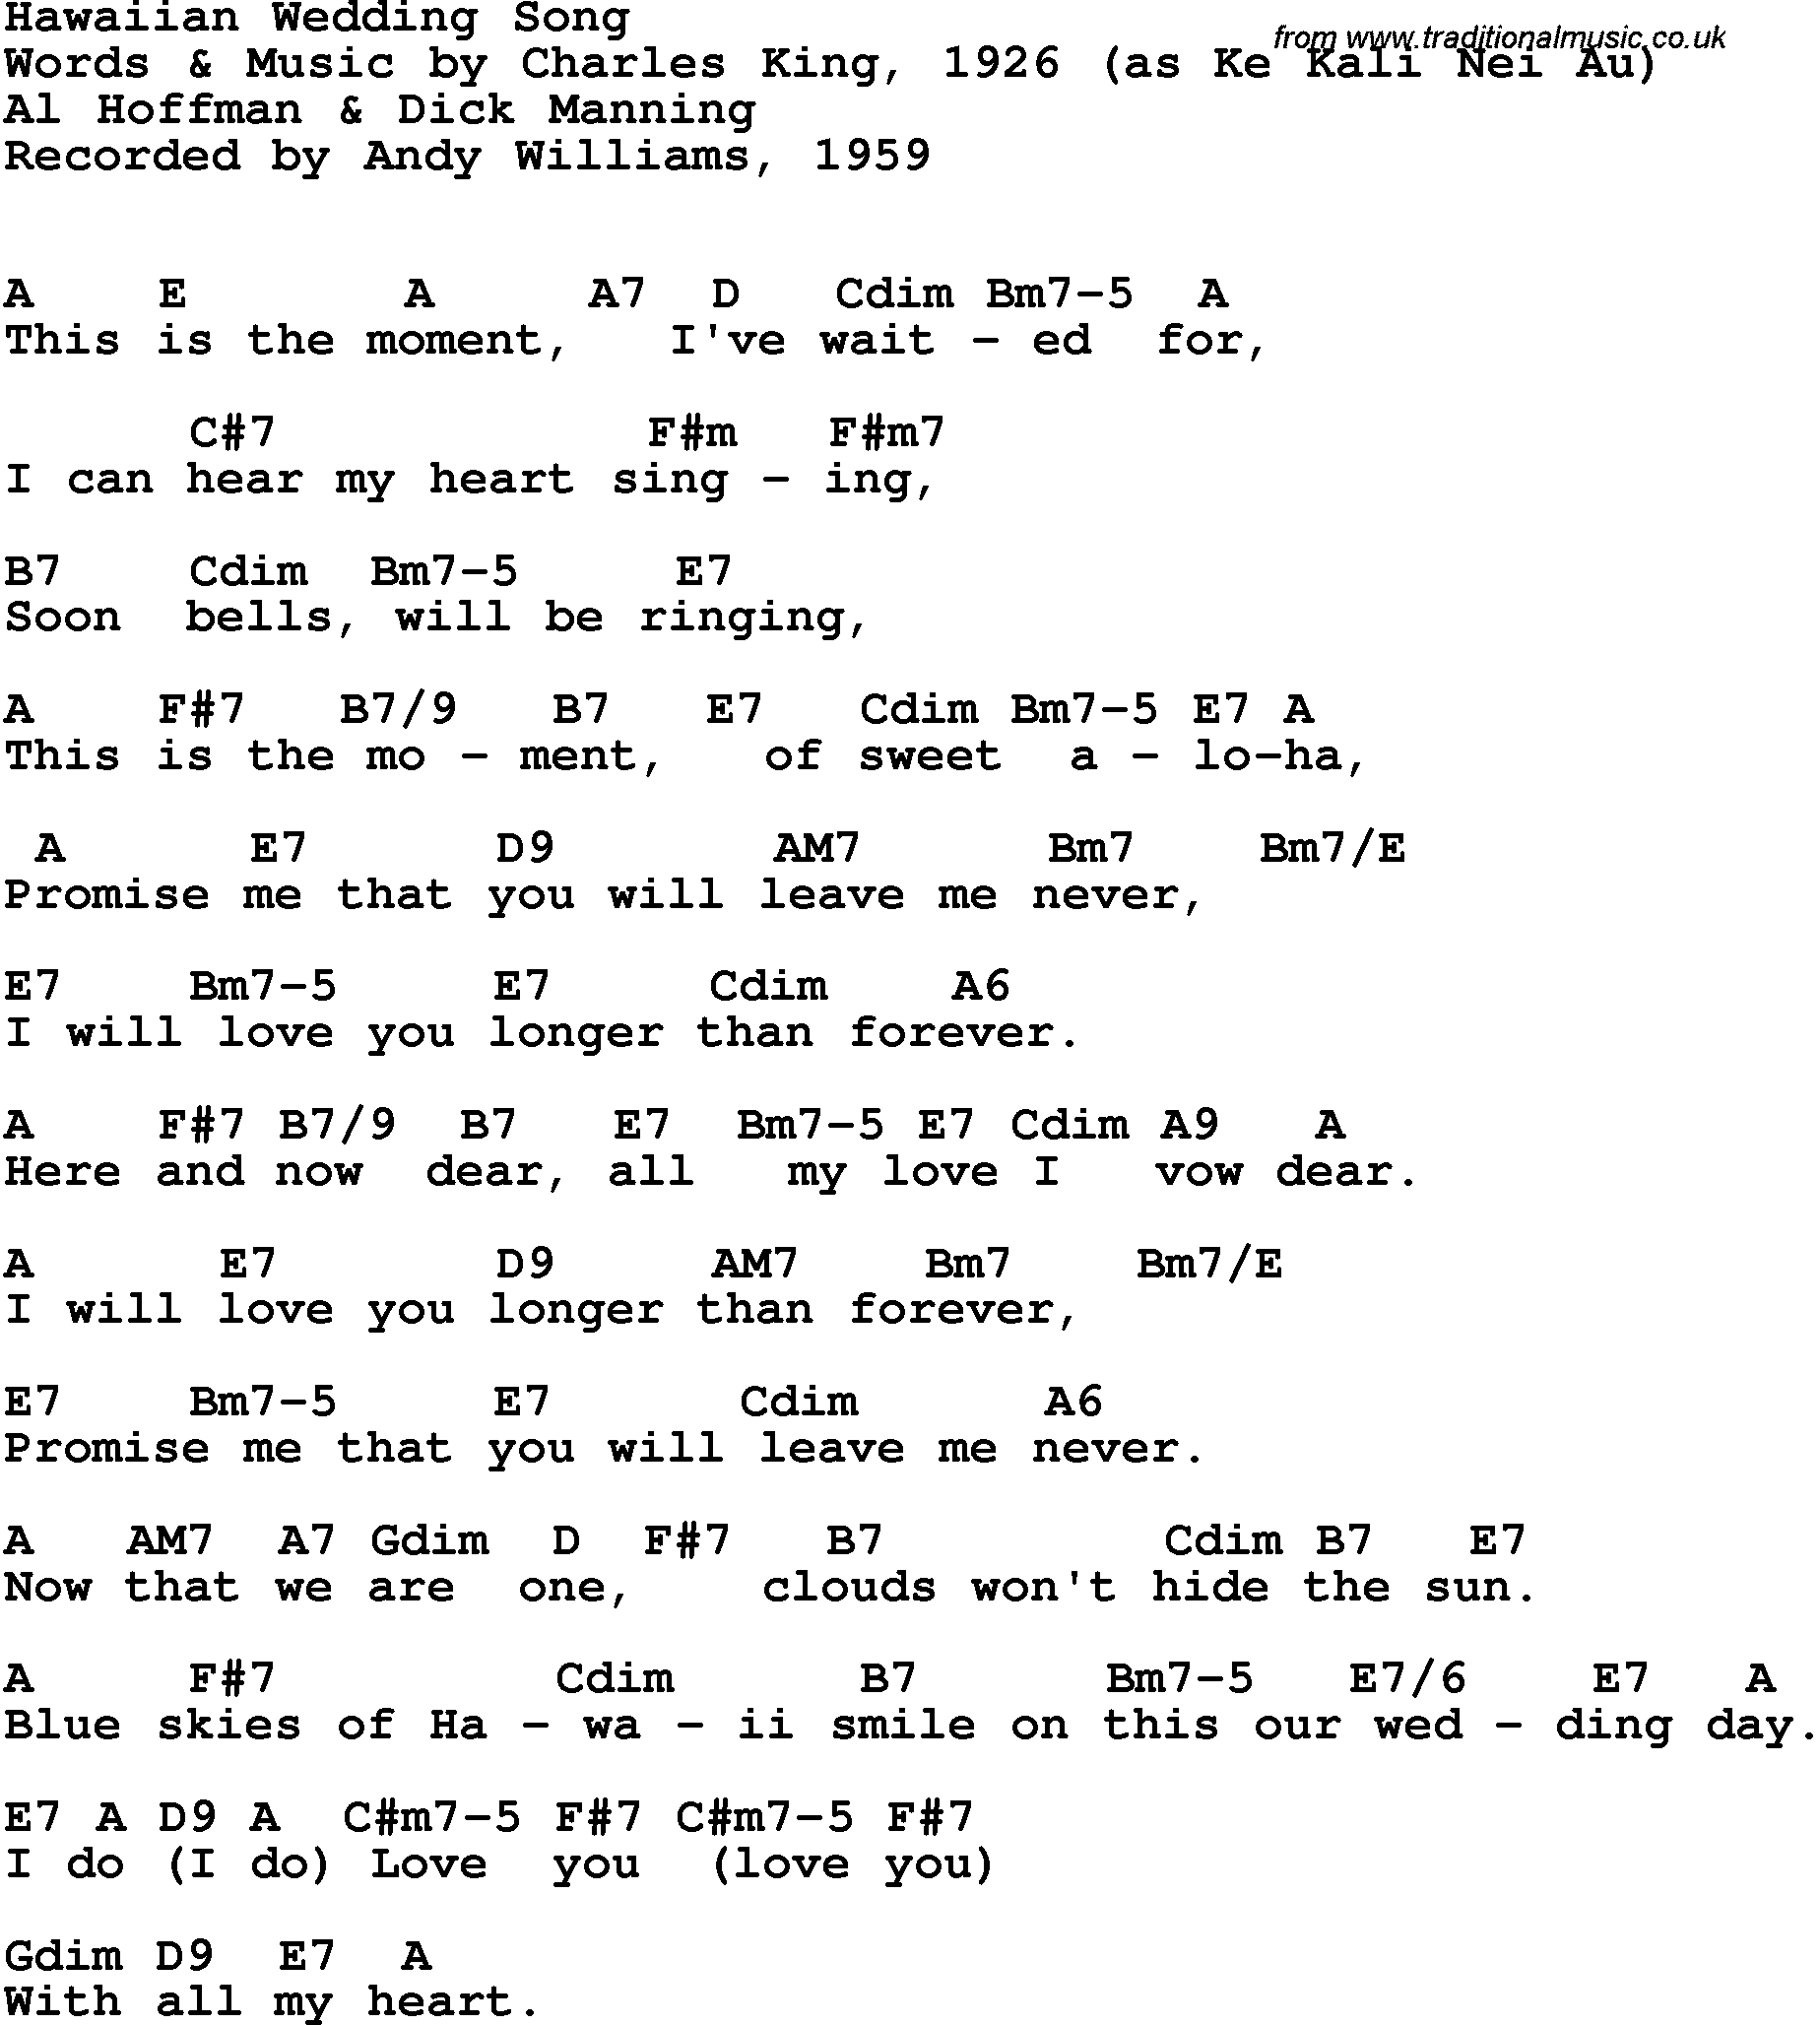 Song Lyrics with guitar chords for Hawaiian Wedding Song - Andy Williams, 1959